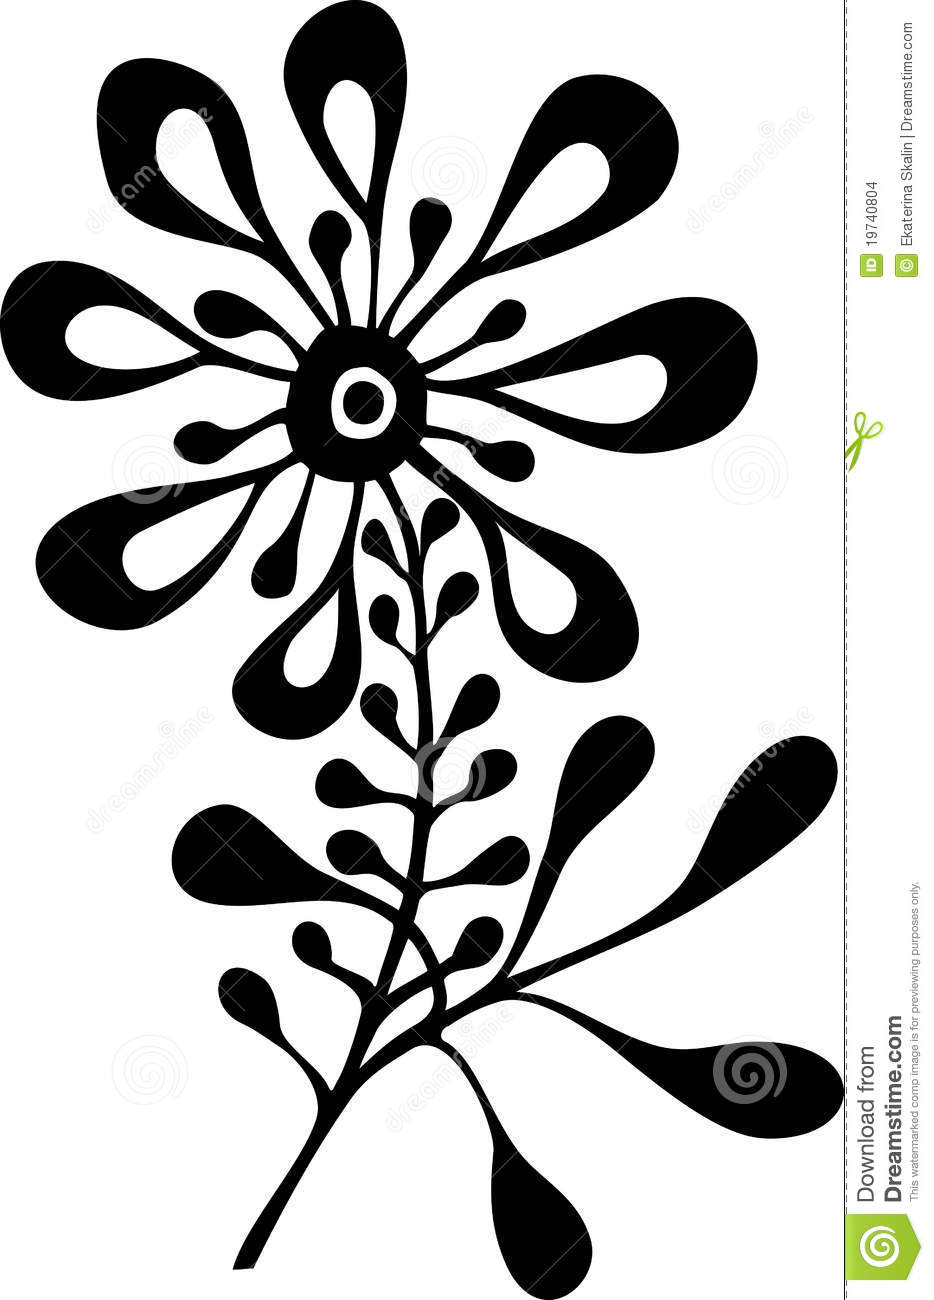 Black and White Flower Vector